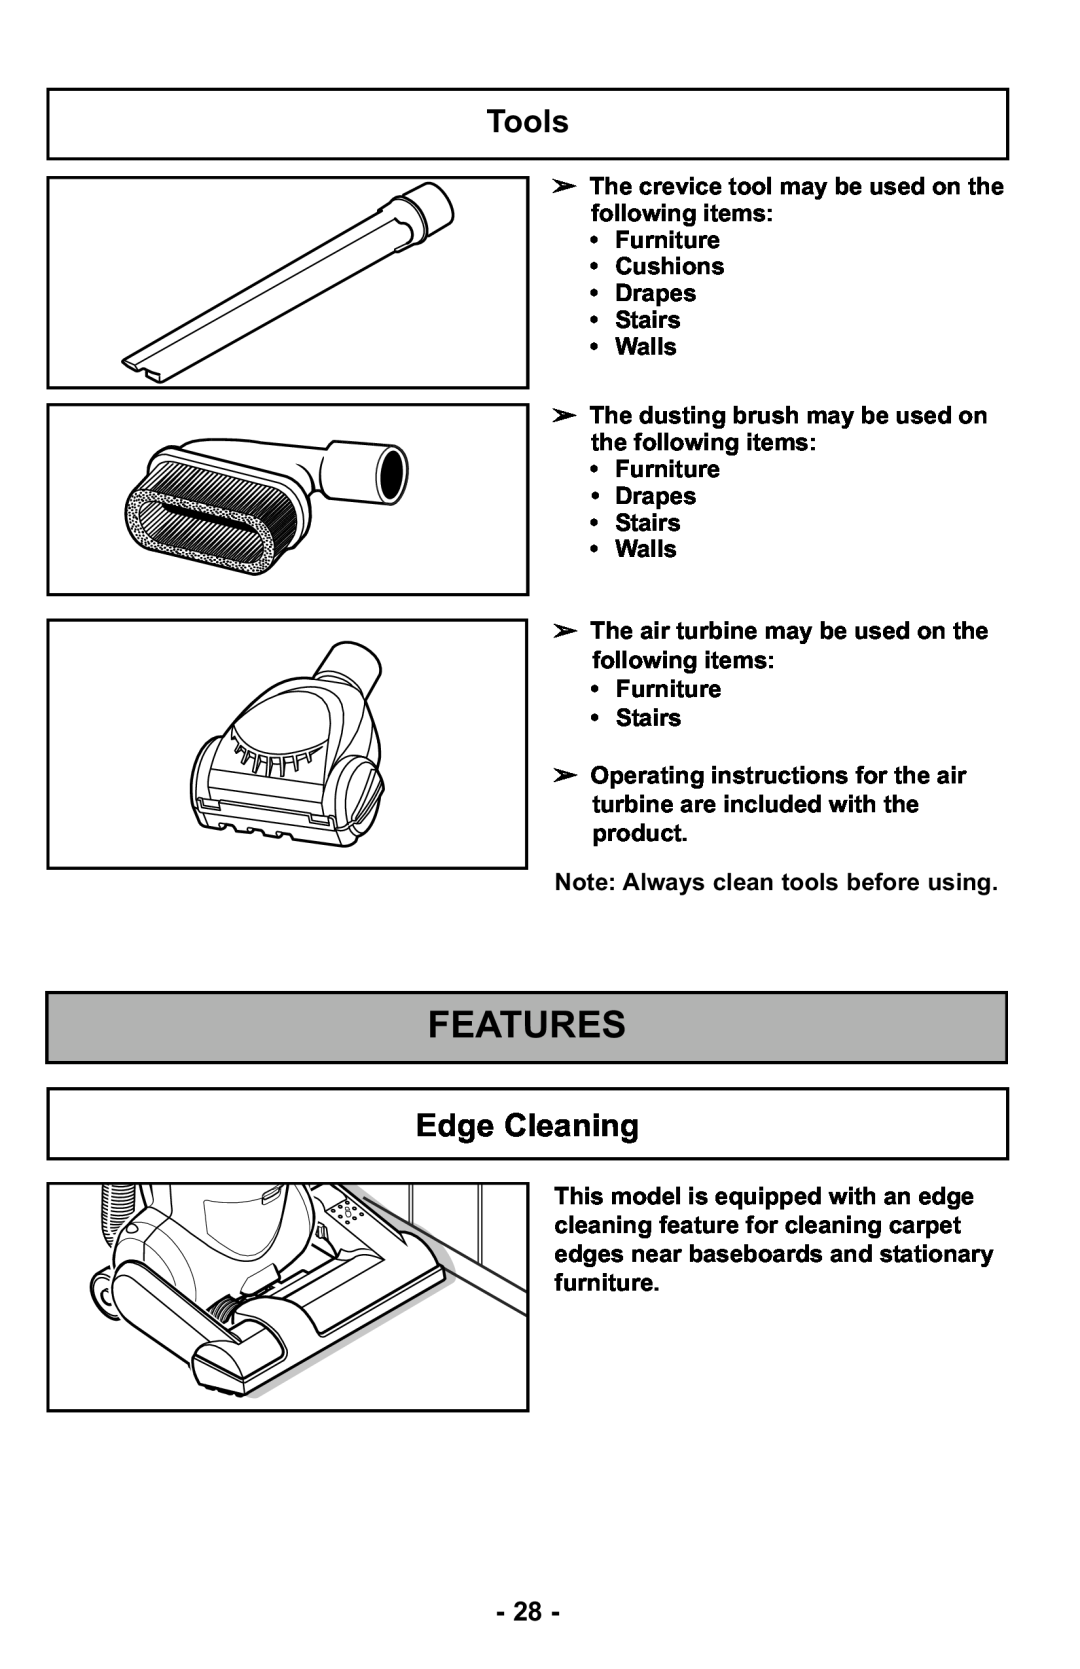 Panasonic MC-UL425 manuel dutilisation Features, Tools, Edge Cleaning 